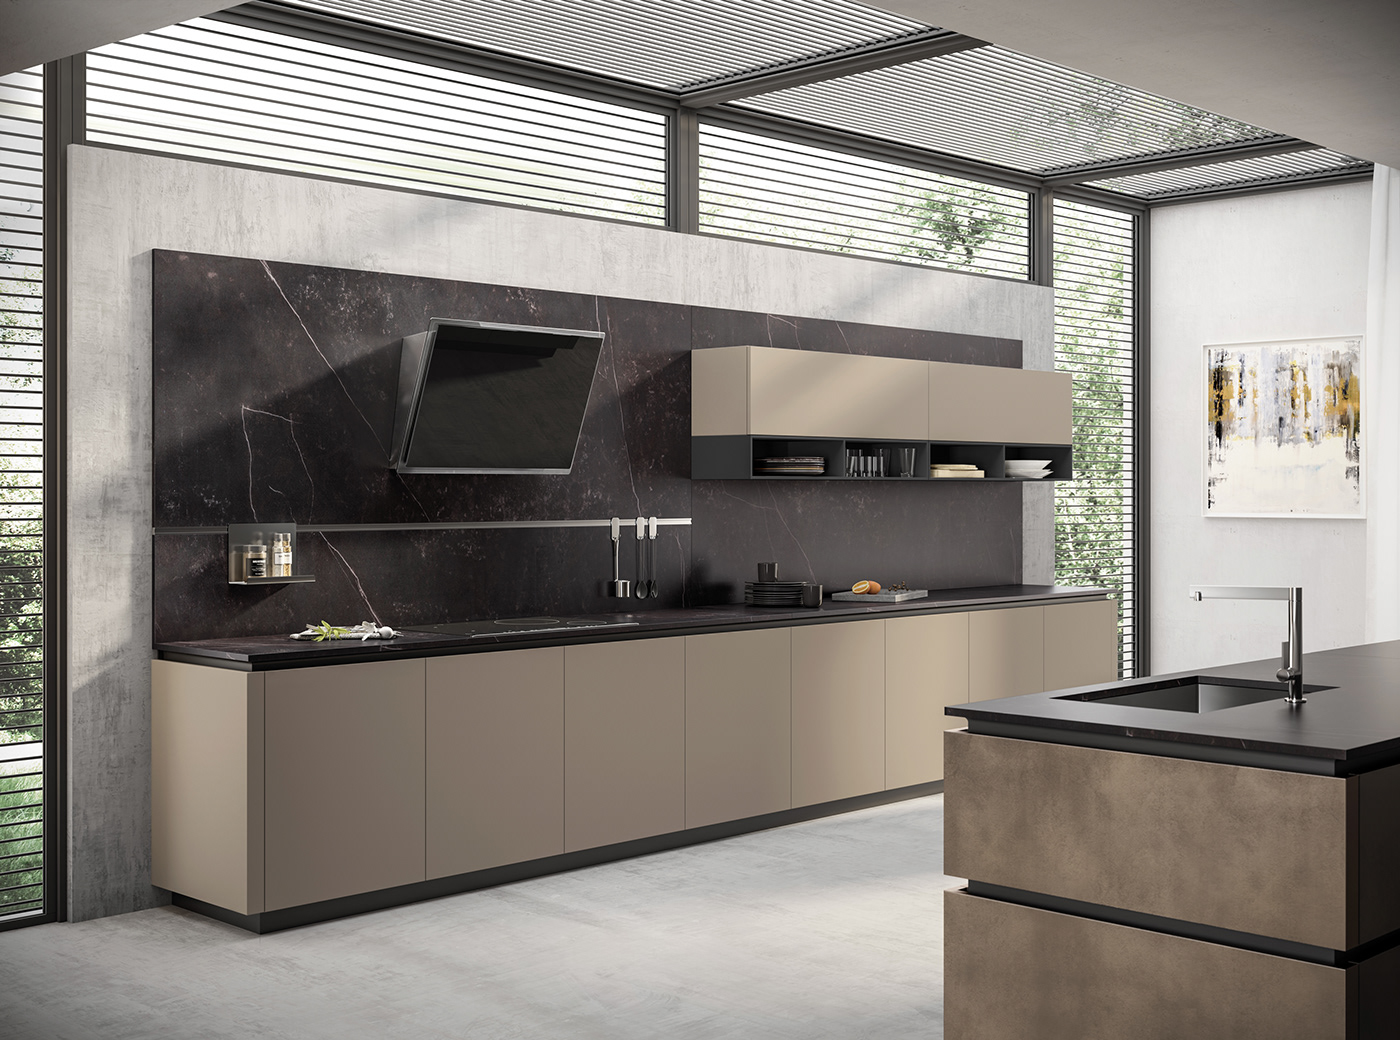 design kitchen Render rendering inspiration 2019 Interior industrial maverick studio podrini living space